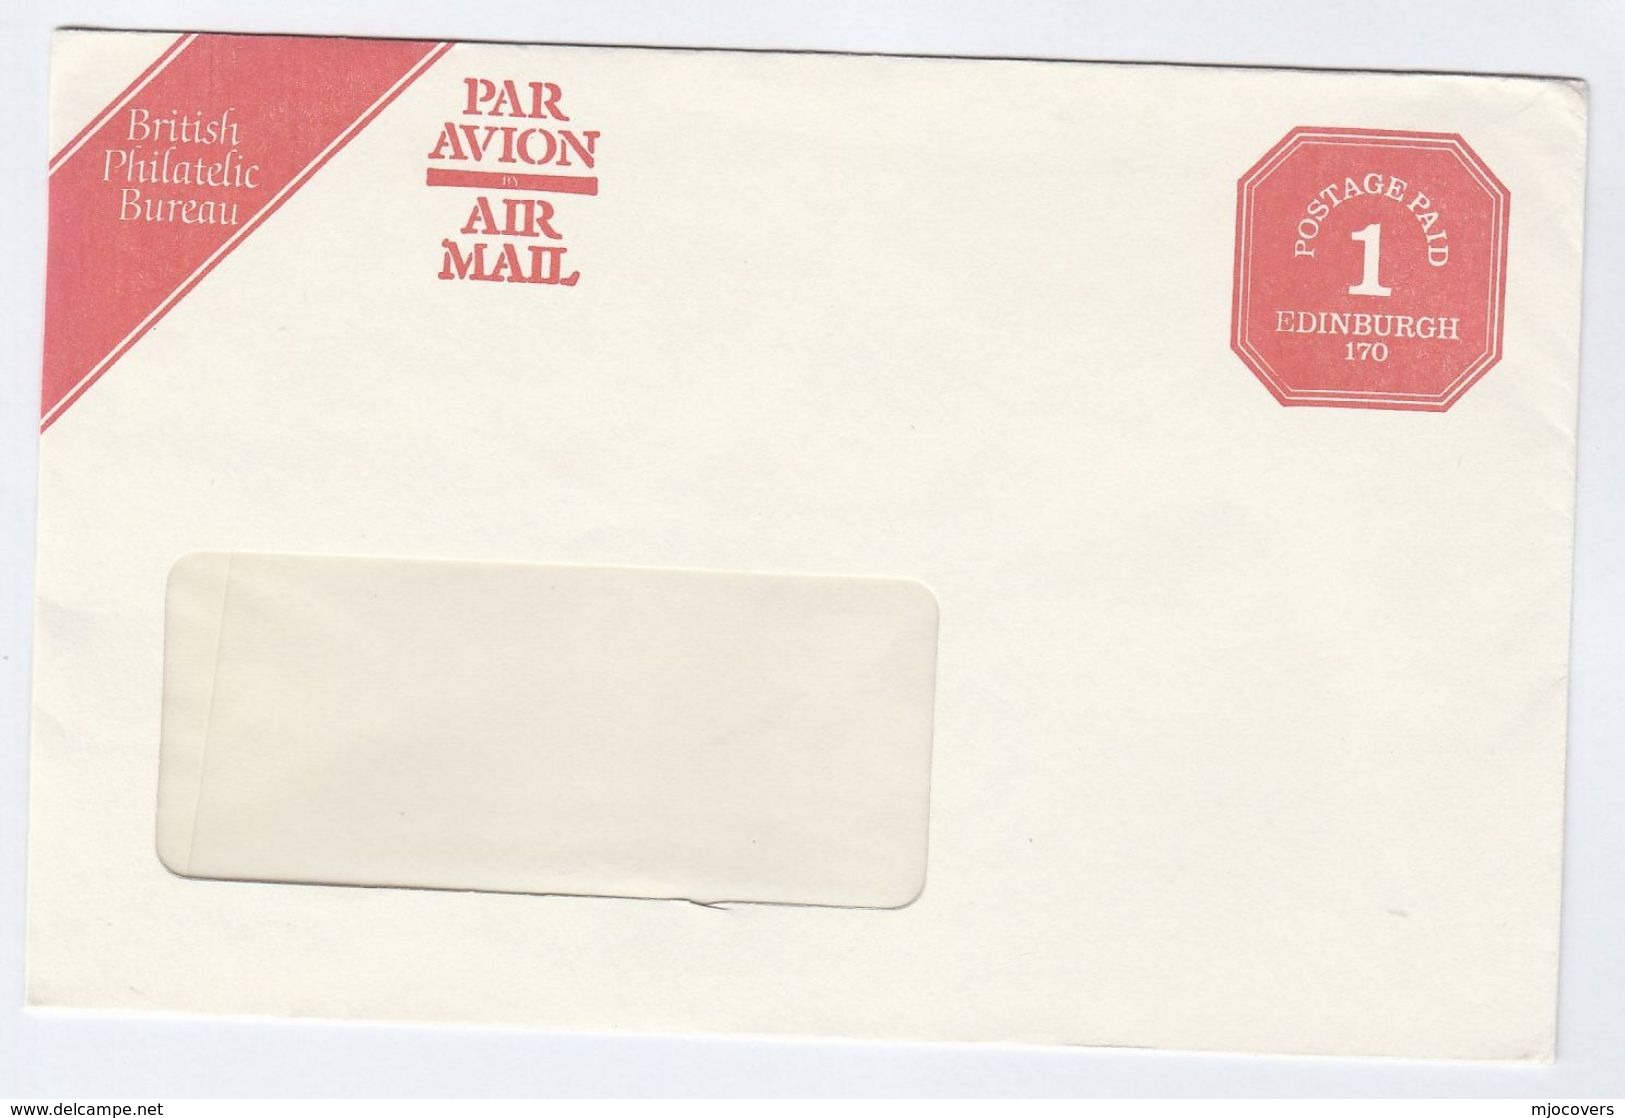 COVER Air Mail POSTAGE PAID 1 EDINBURGH 170 British Philatelic Bureau Postage Stationery GB - Covers & Documents